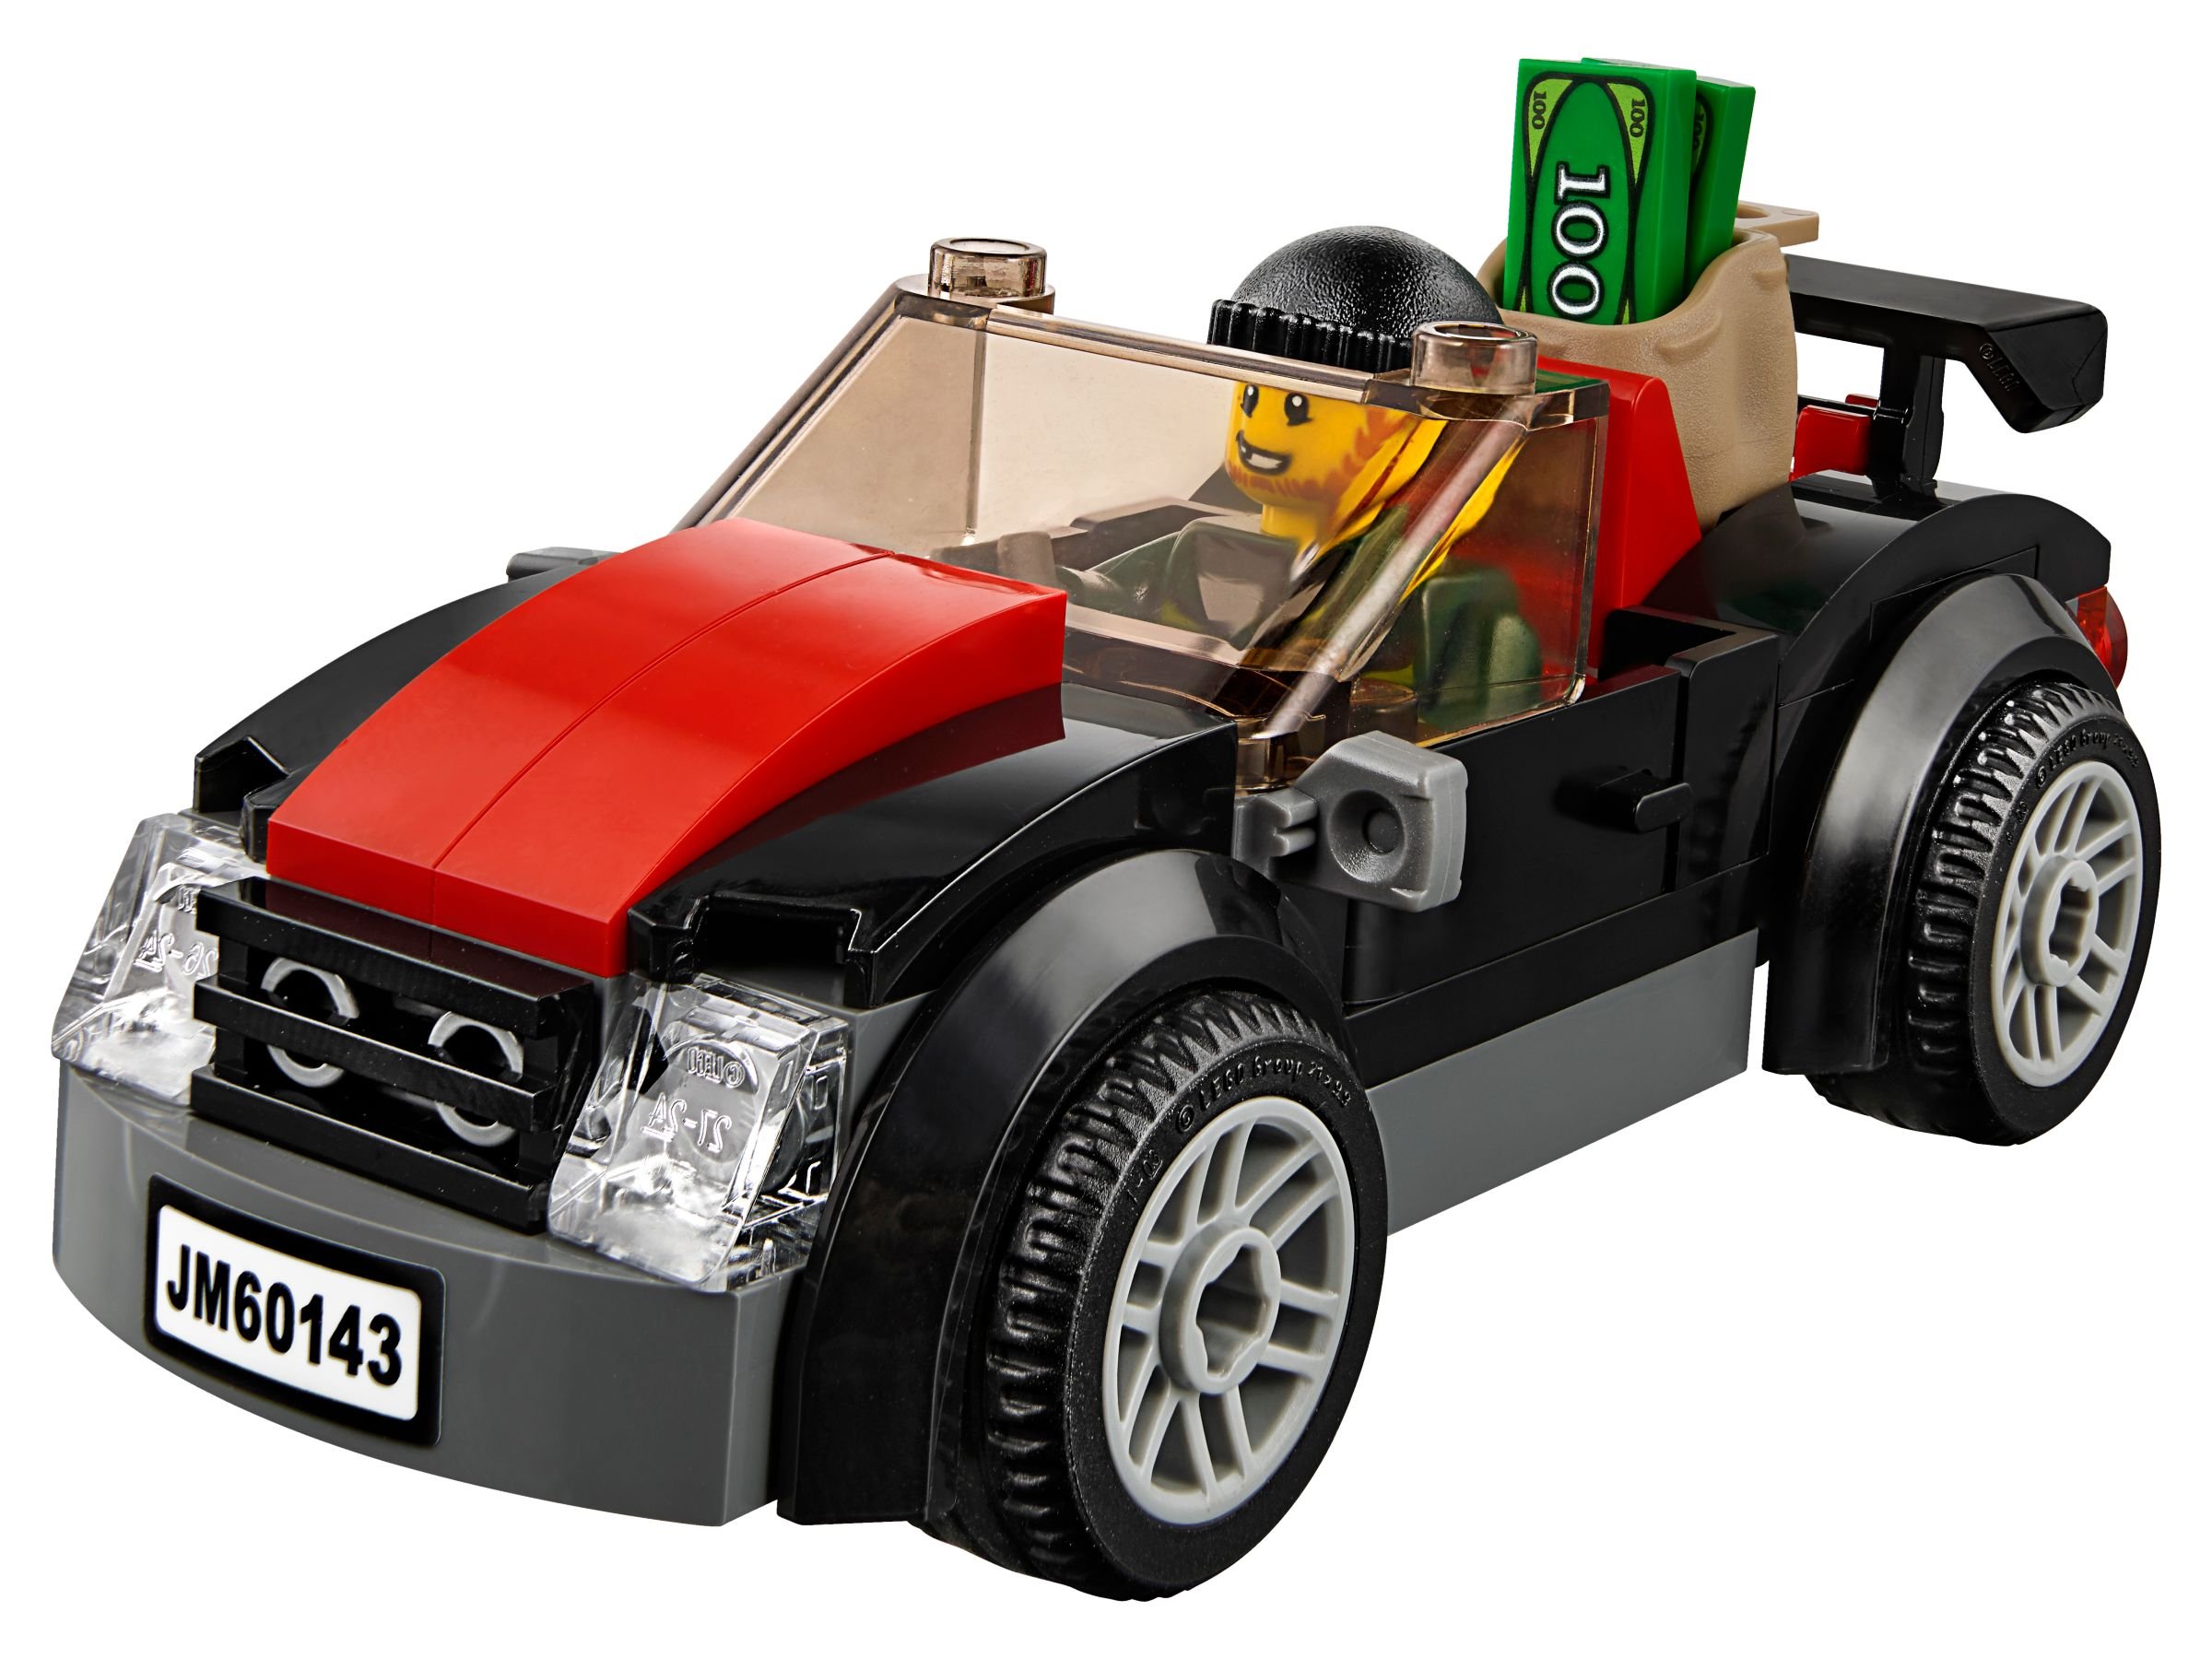 LEGO City 60143 Überfall auf Autotransporter LEGO_60143_alt6.jpg